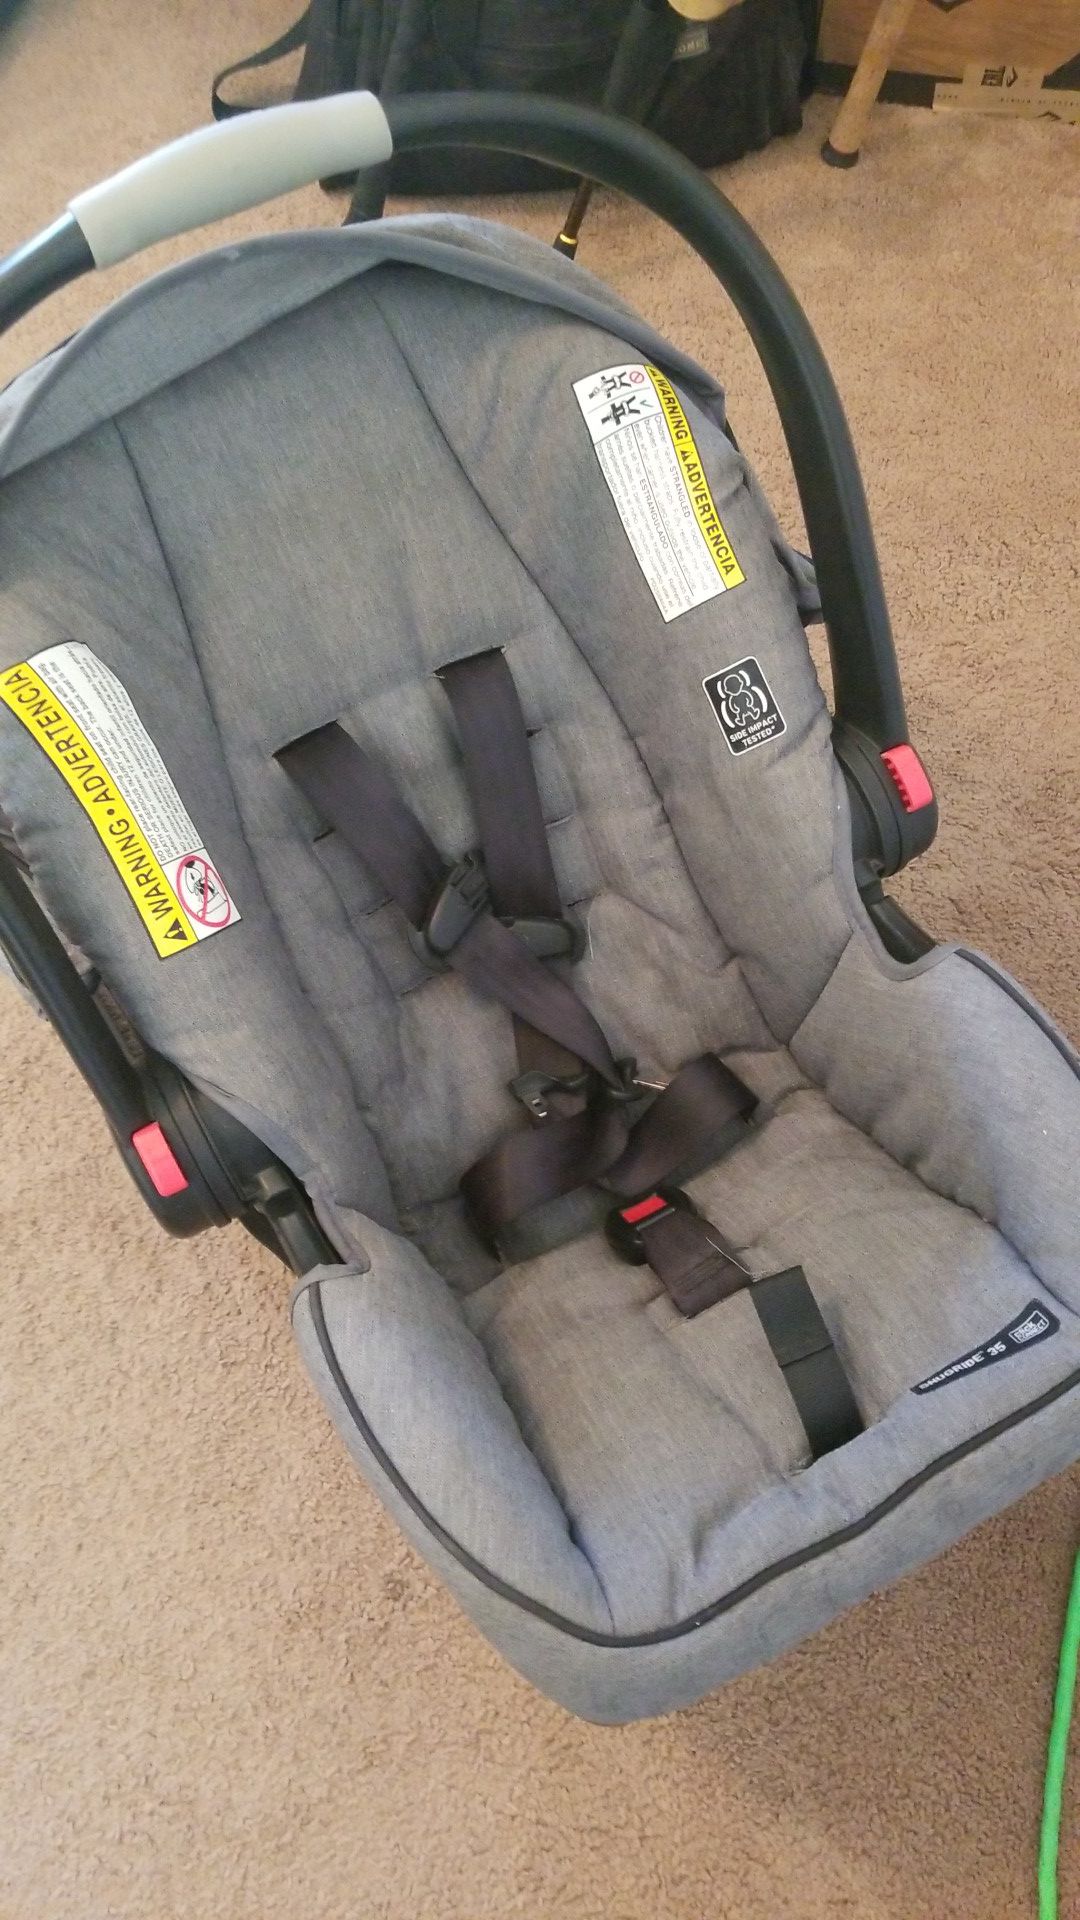 Graco snugride 35 baby car seat